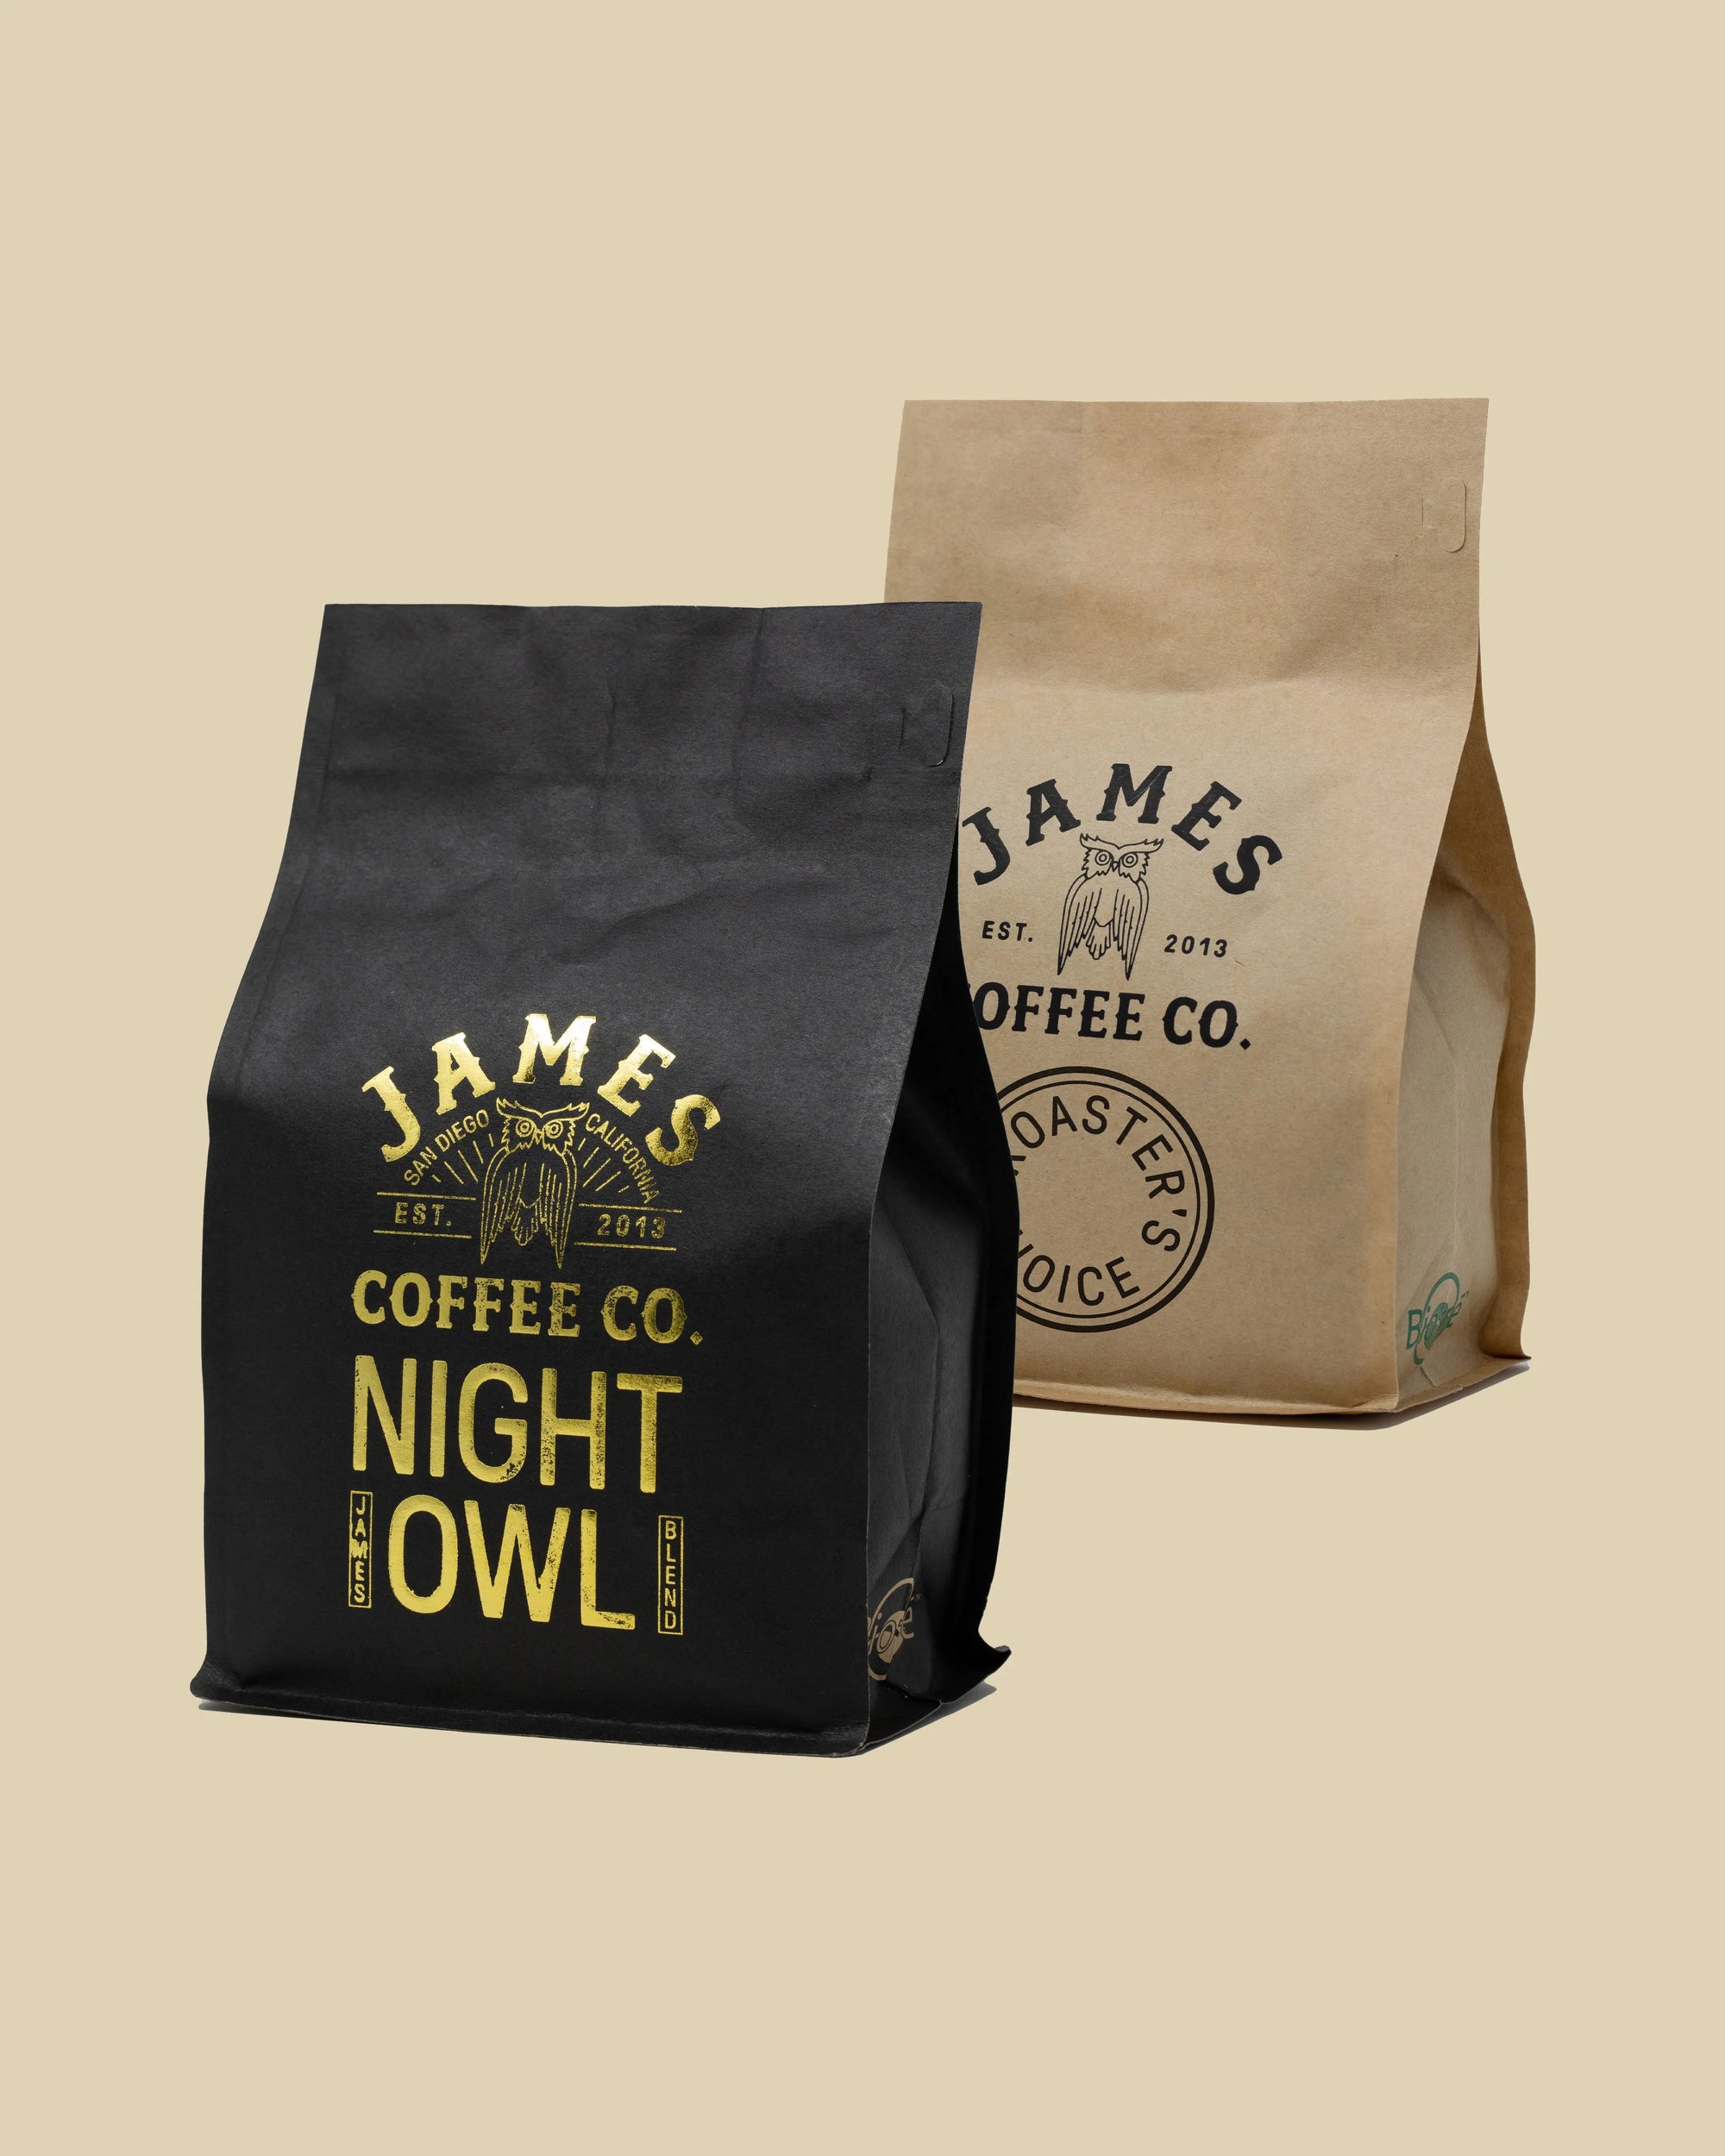 Night Owl/Roaster's Choice James Coffee Co